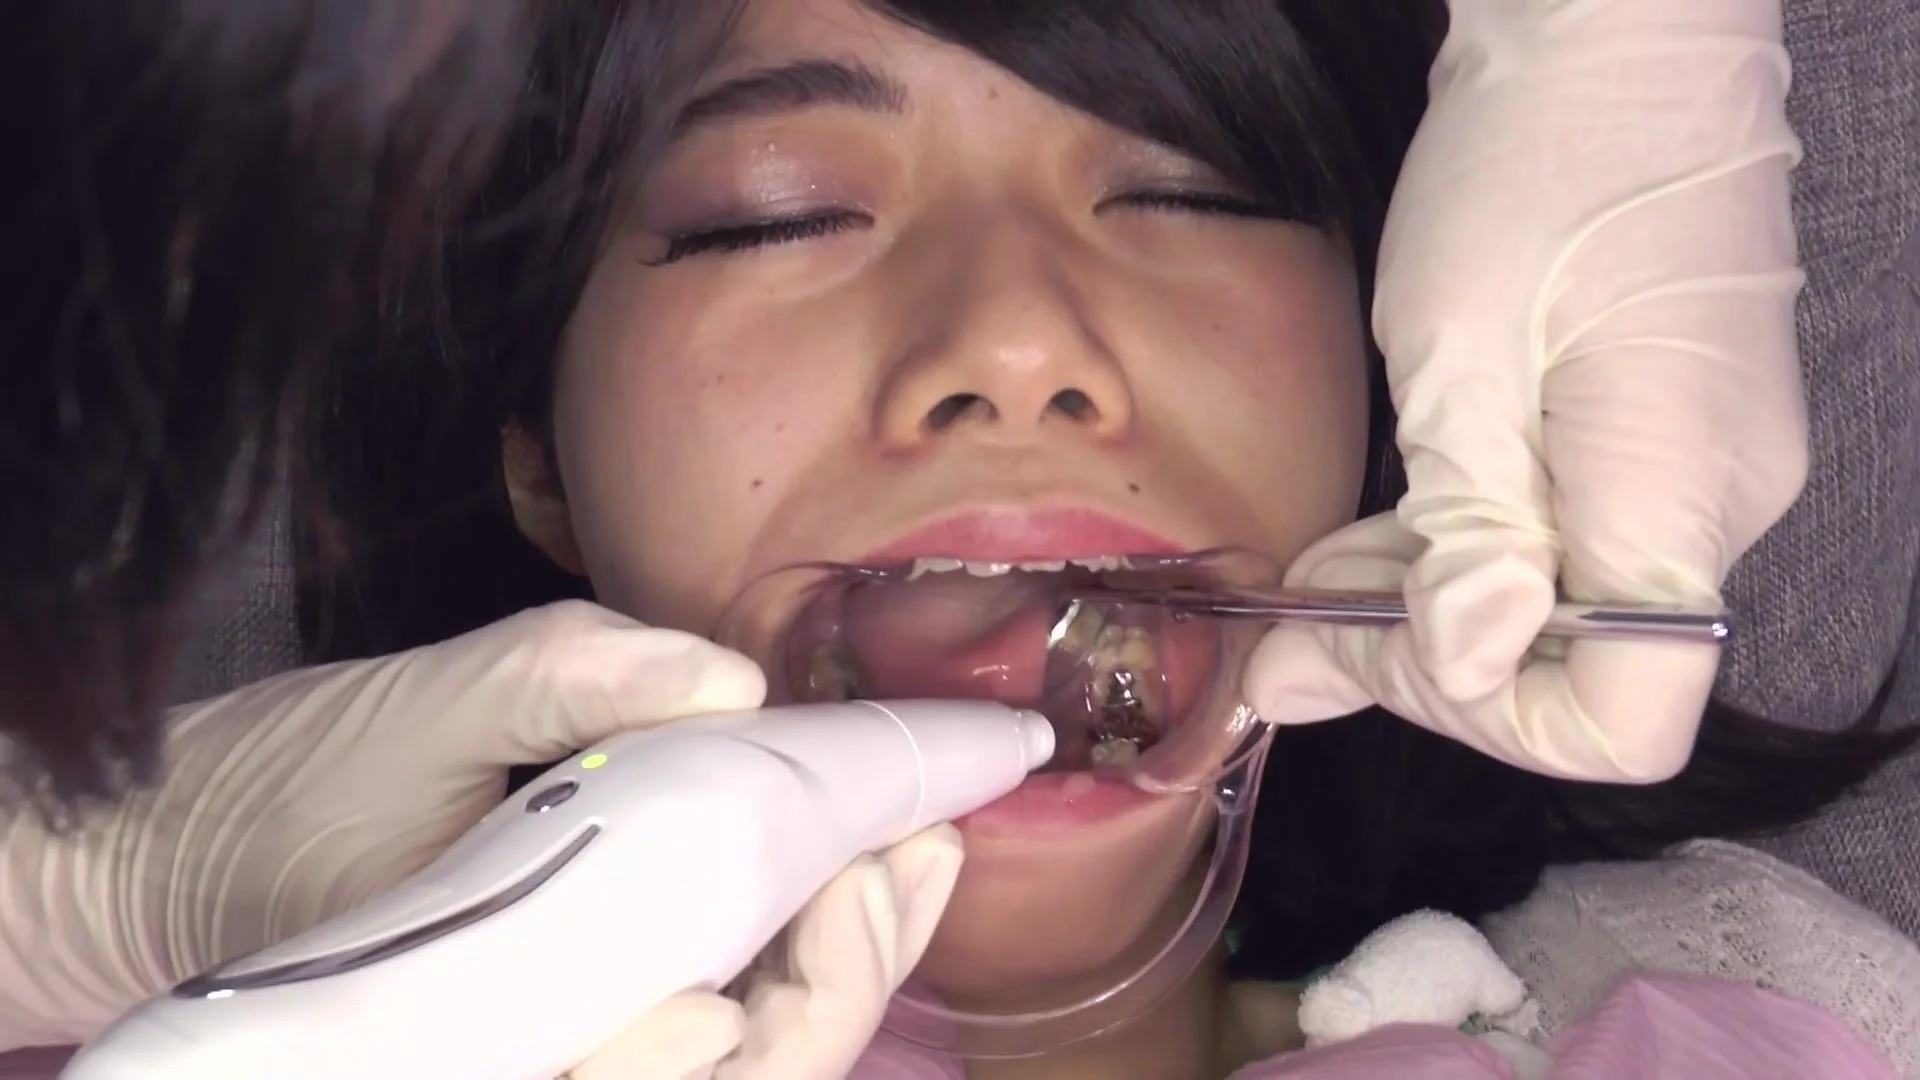 Dental fetish video